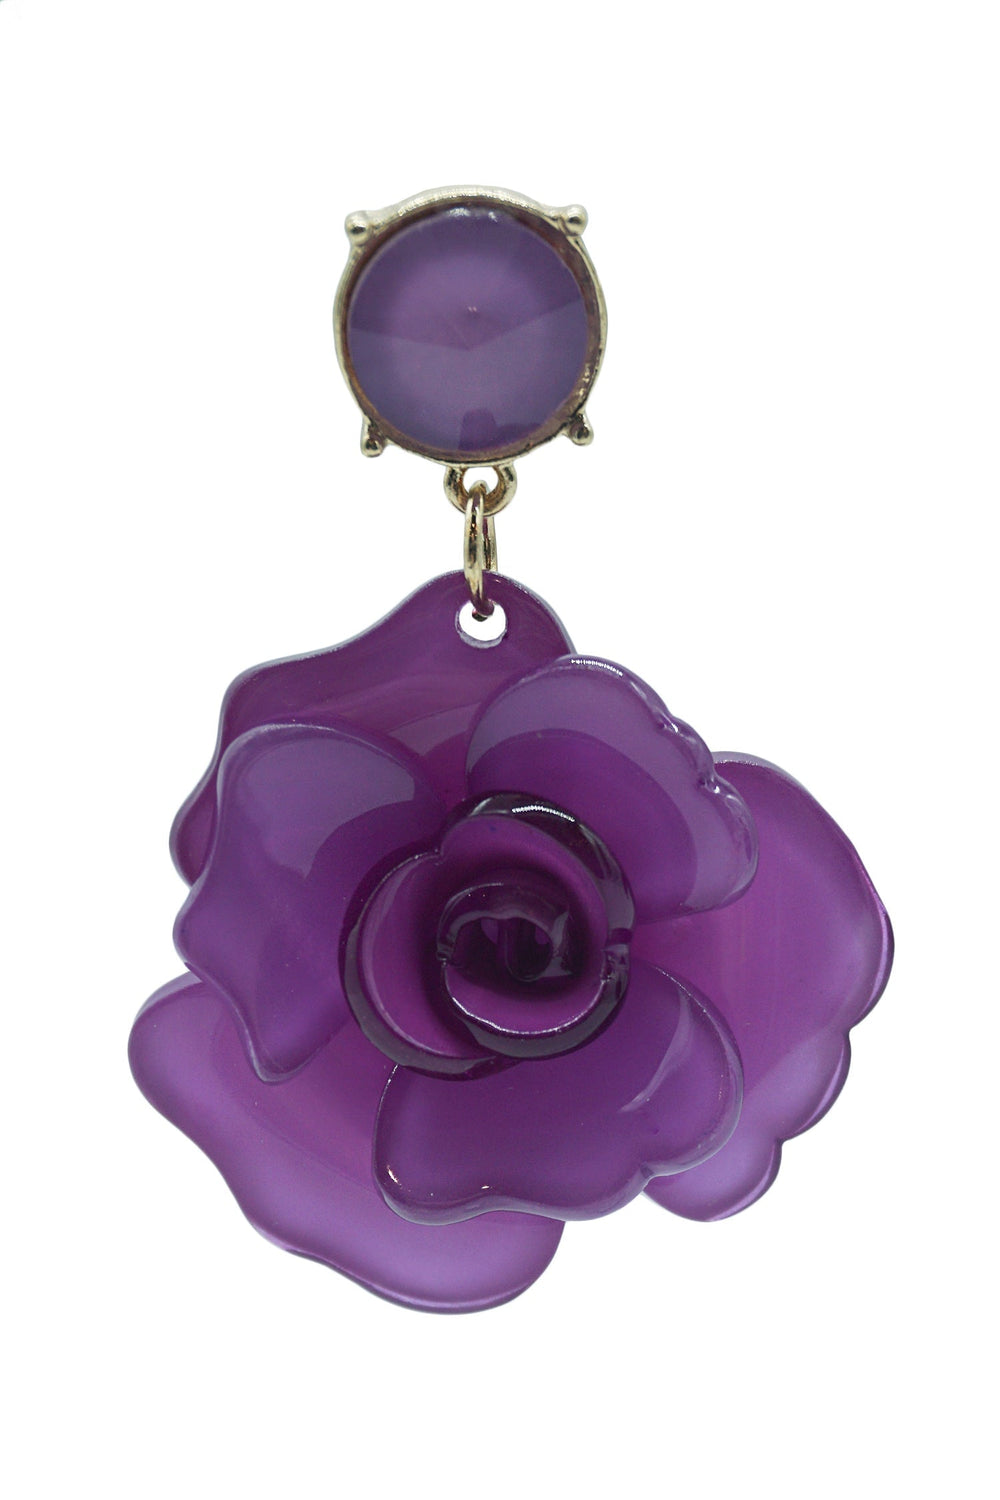 Camilla Violet Acrylic Flower Earrings